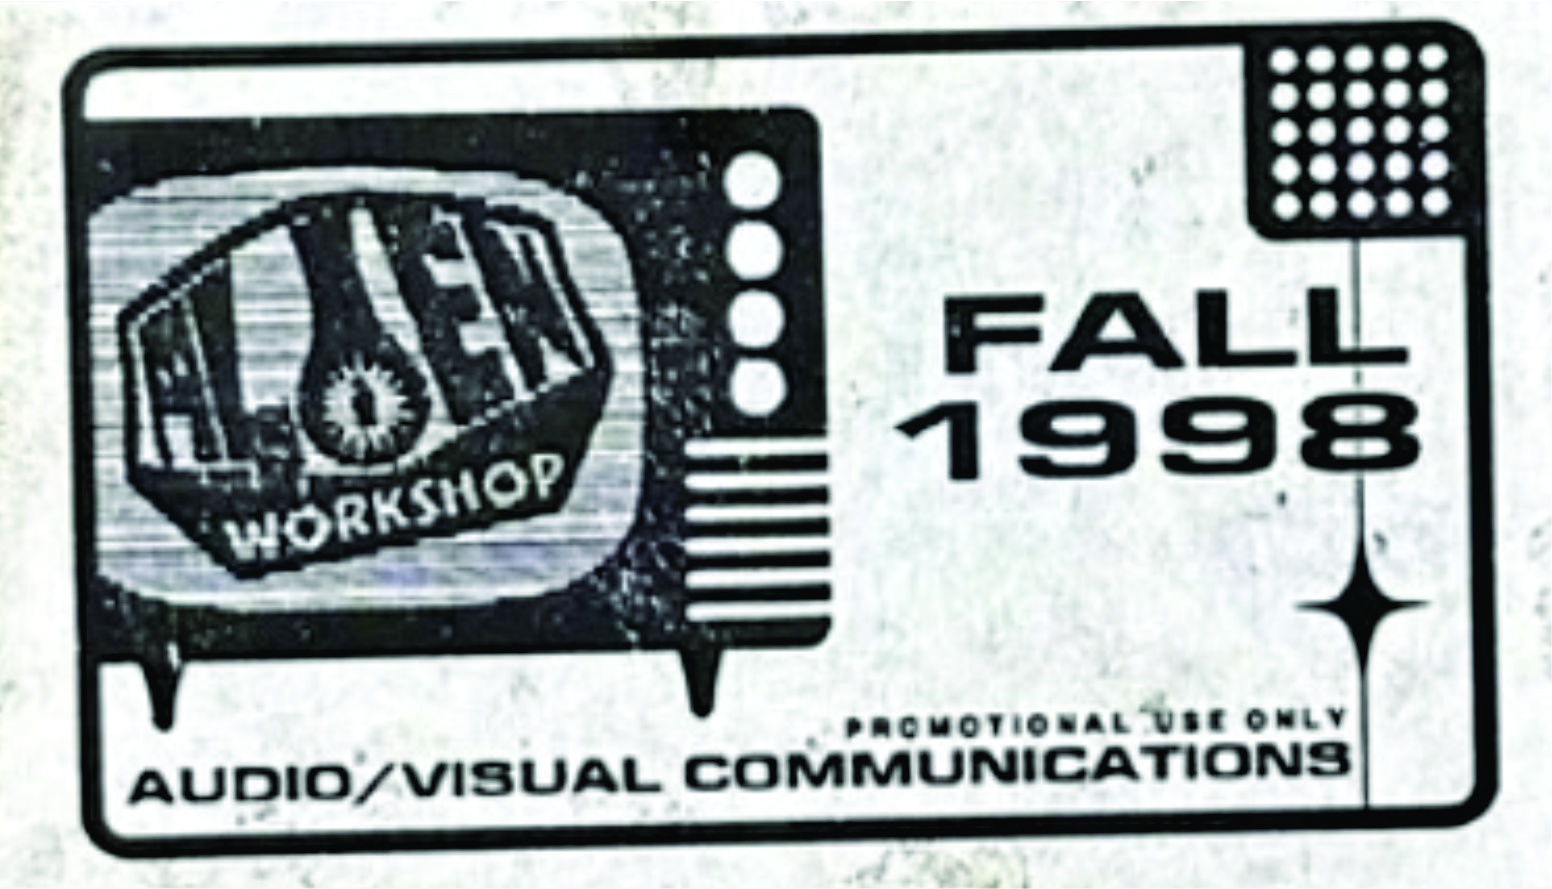 Alien Workshop - Fall 1998 feature image